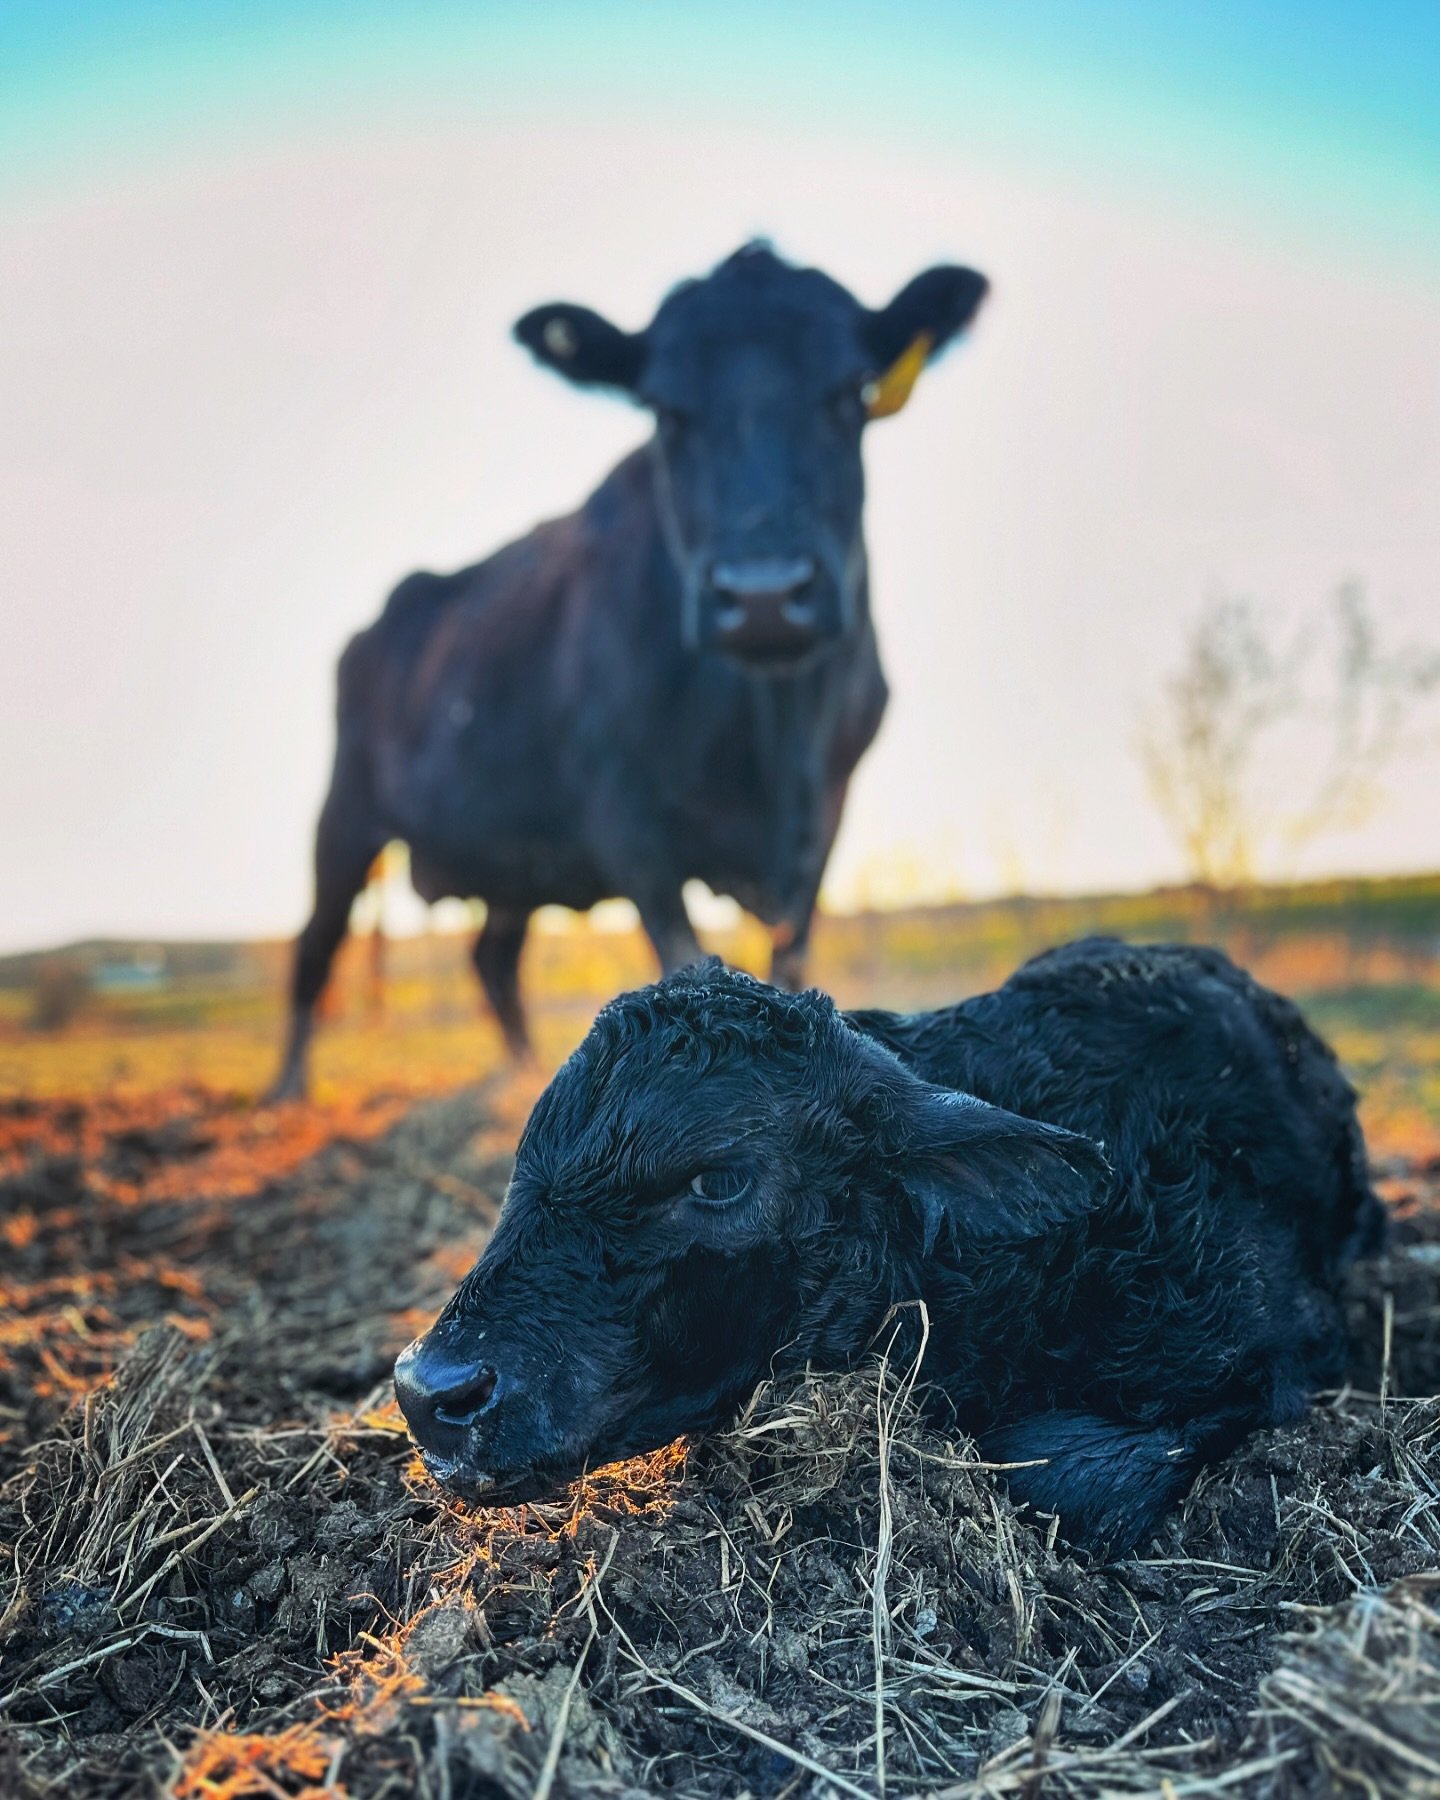 Calving season has officially begun at the ranch!! Get ready for all the calf pictures 😍😍😍

And a BIG way to go and CONGRATS to this super mom!

________

#calf #supermom #freshouttheoven #calvingseason #ranching #ranchlife #farmlife #farming #ver